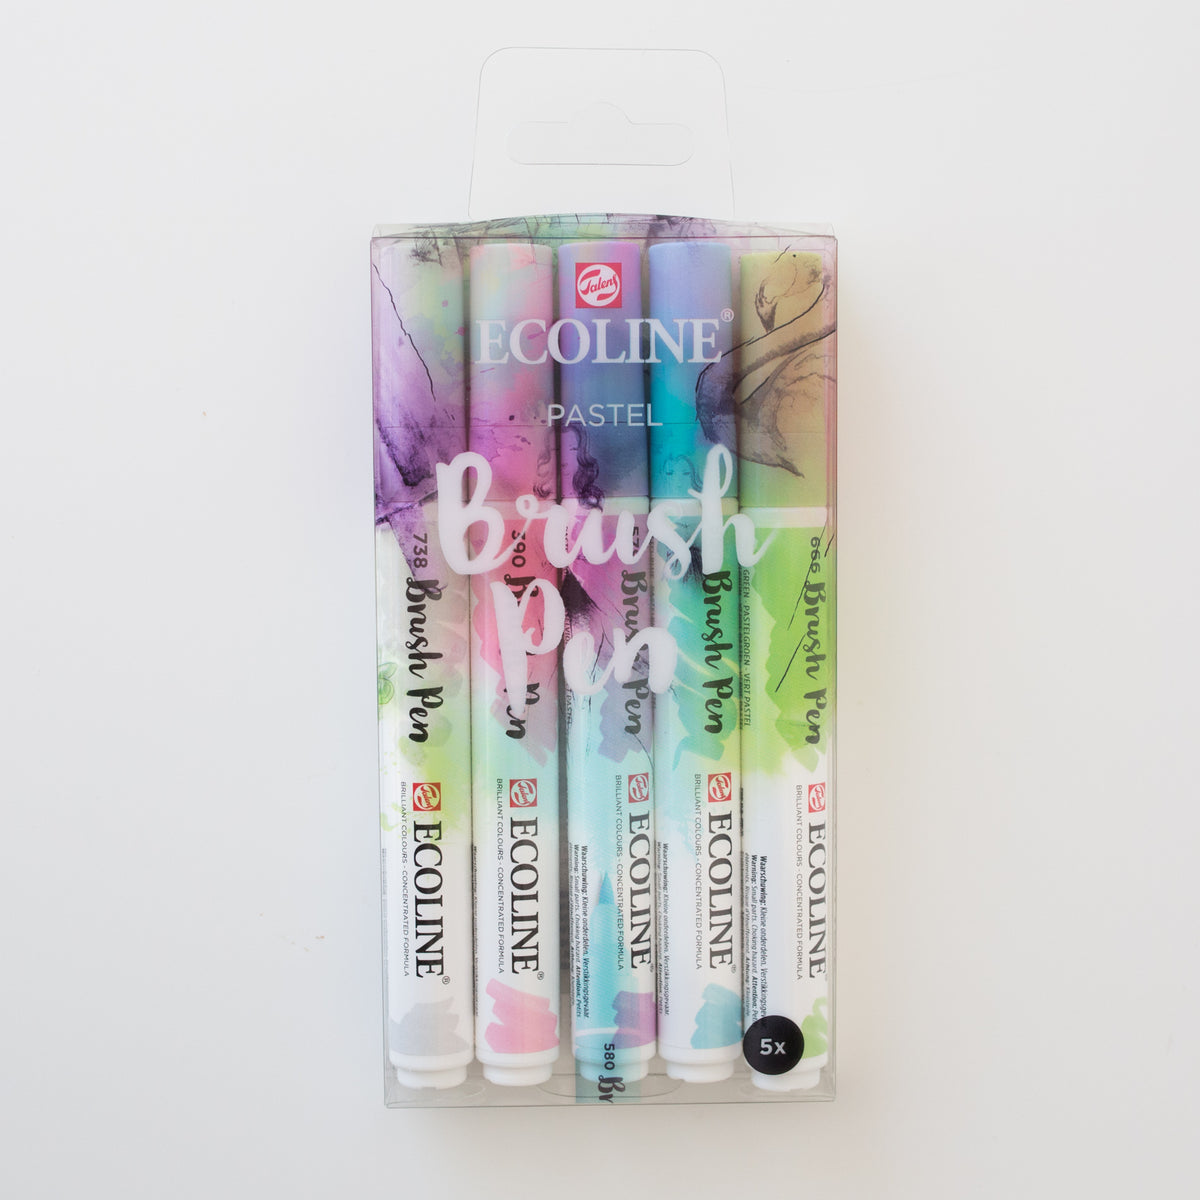 Ecoline Pinselstift-Set Pastell